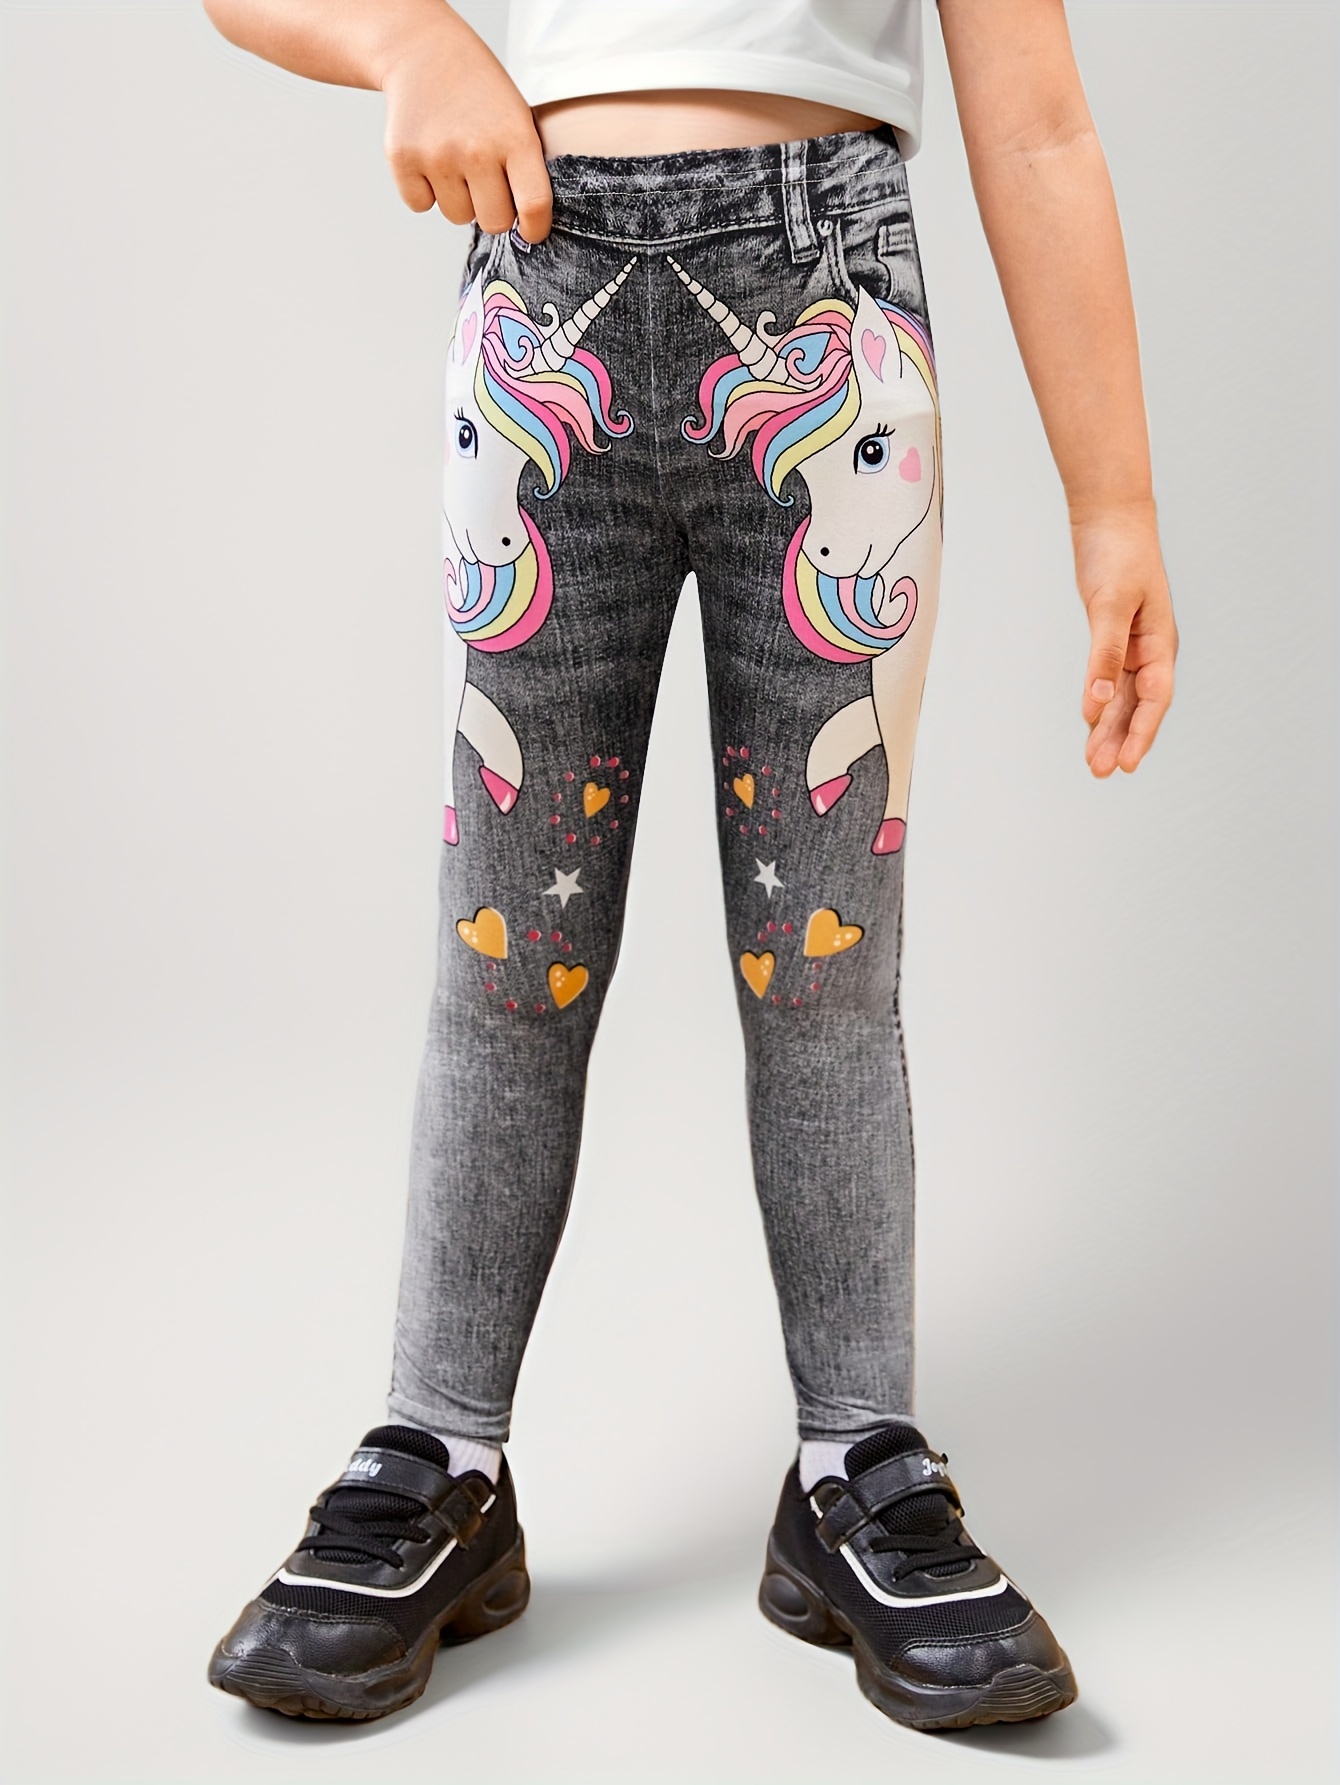 Girls Cartoon Unicorn Leggings Contrast Color Legging Pants  Spring/Summer/Fall Kids Clothes